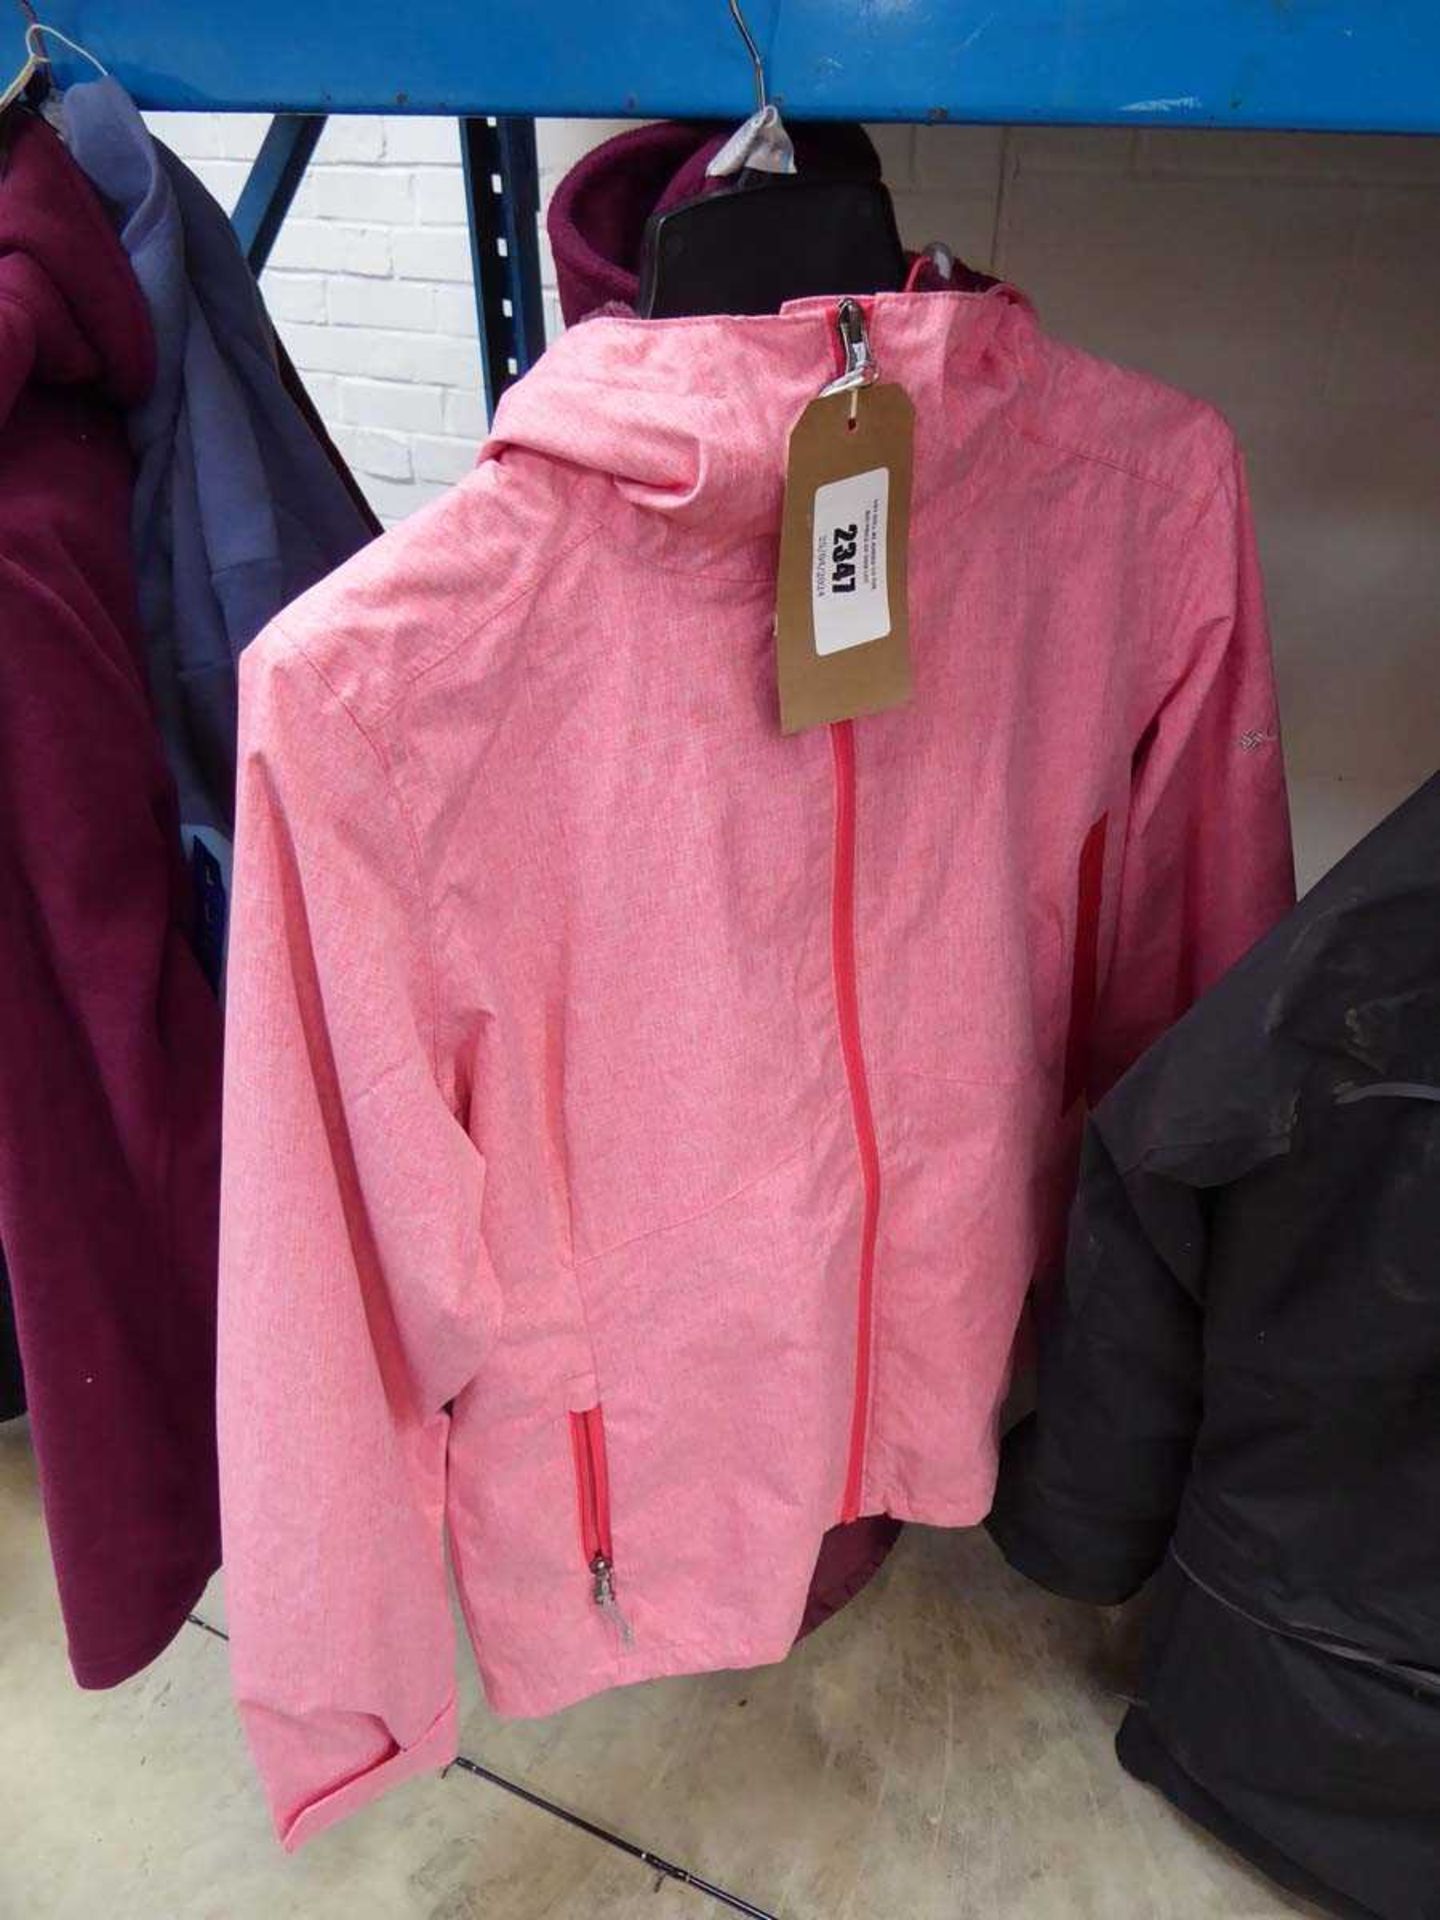 +VAT Colombia full zip waterproof jacket in pink size M together with Colombia full zip fleece in